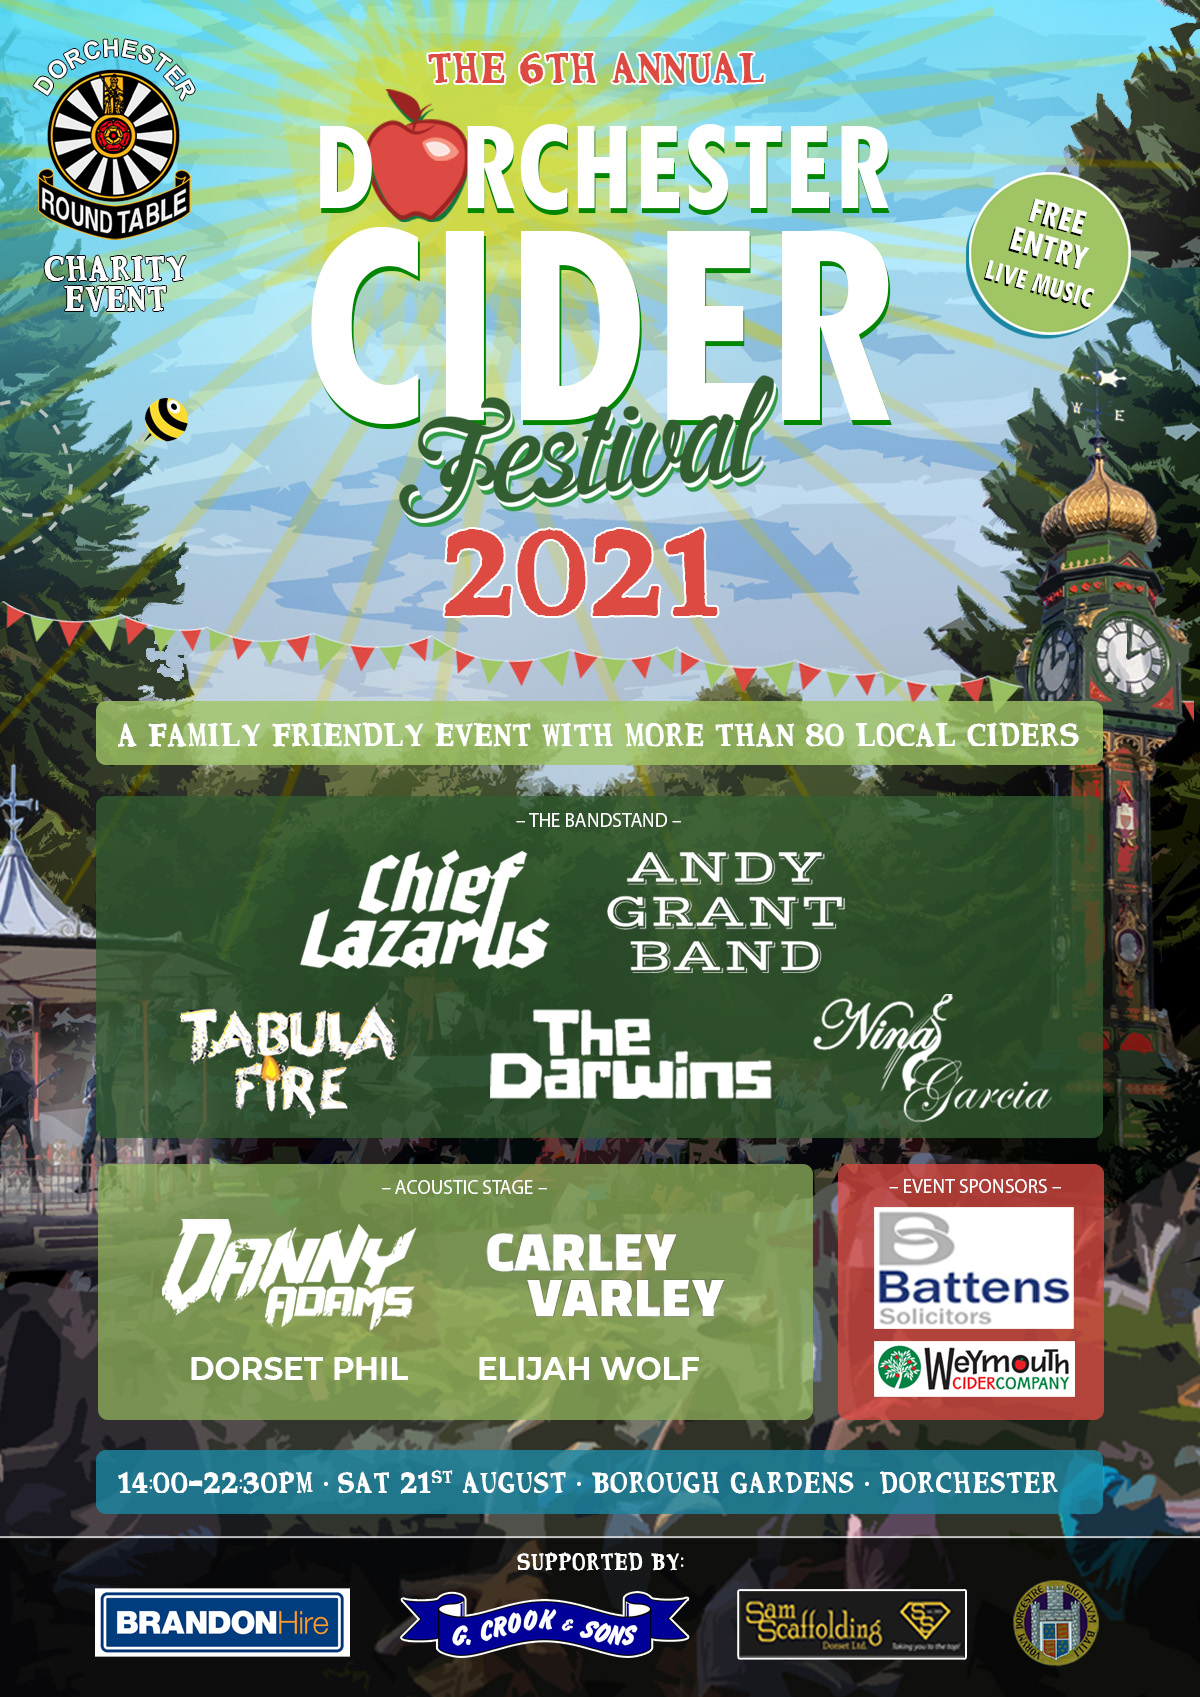 Dorchester cider festival 2021 poster